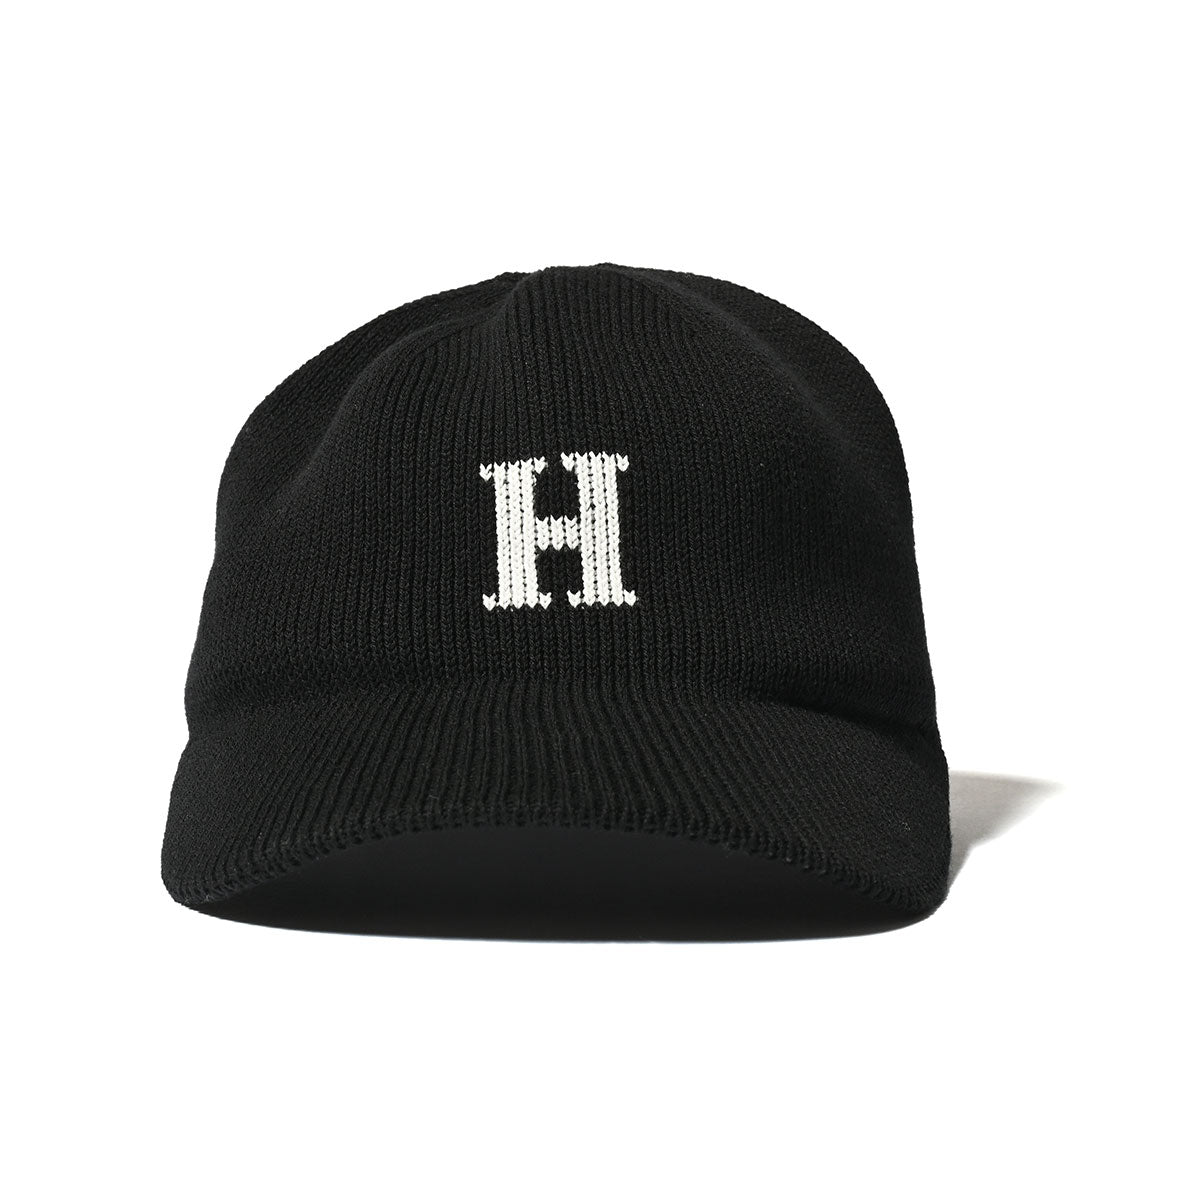 HOMEGAME - H LOGO COTTON KNIT BASEBALL CAP BLACK【HG241414】